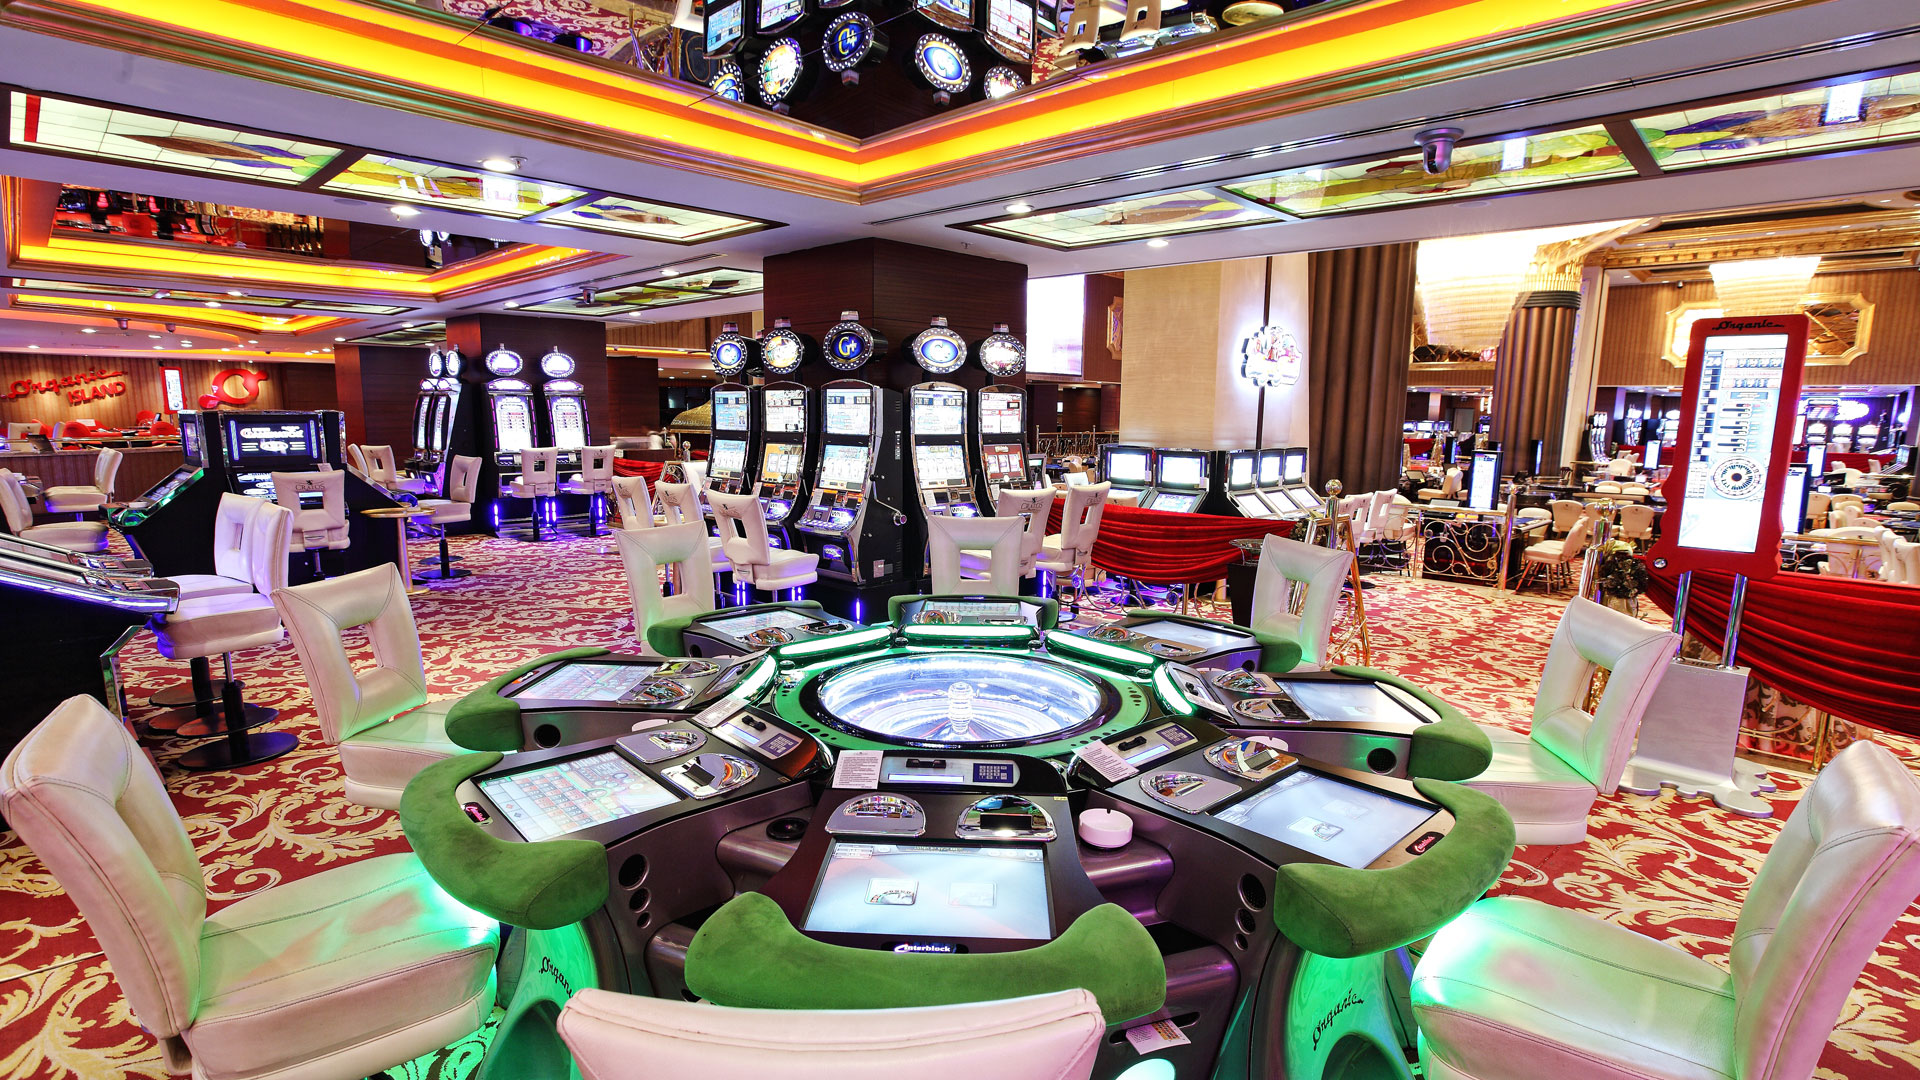 Beginner’s Guide to Online Casinos